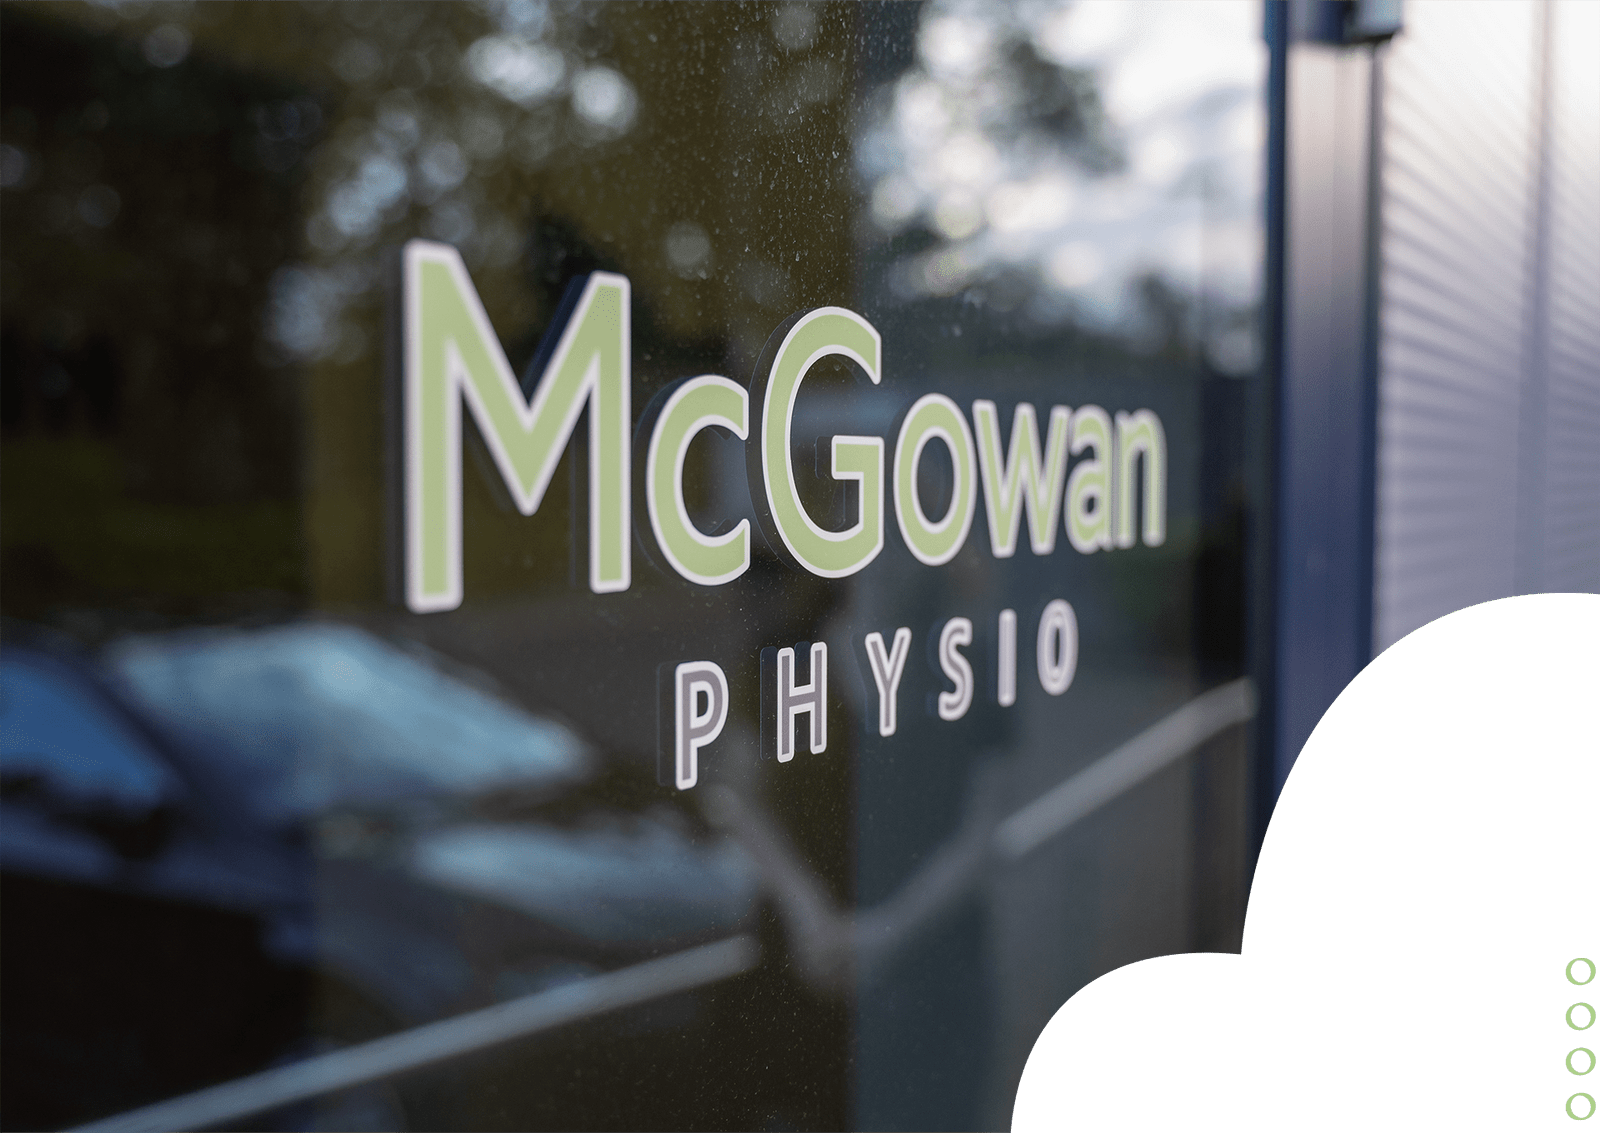 McGowan Physio branded door